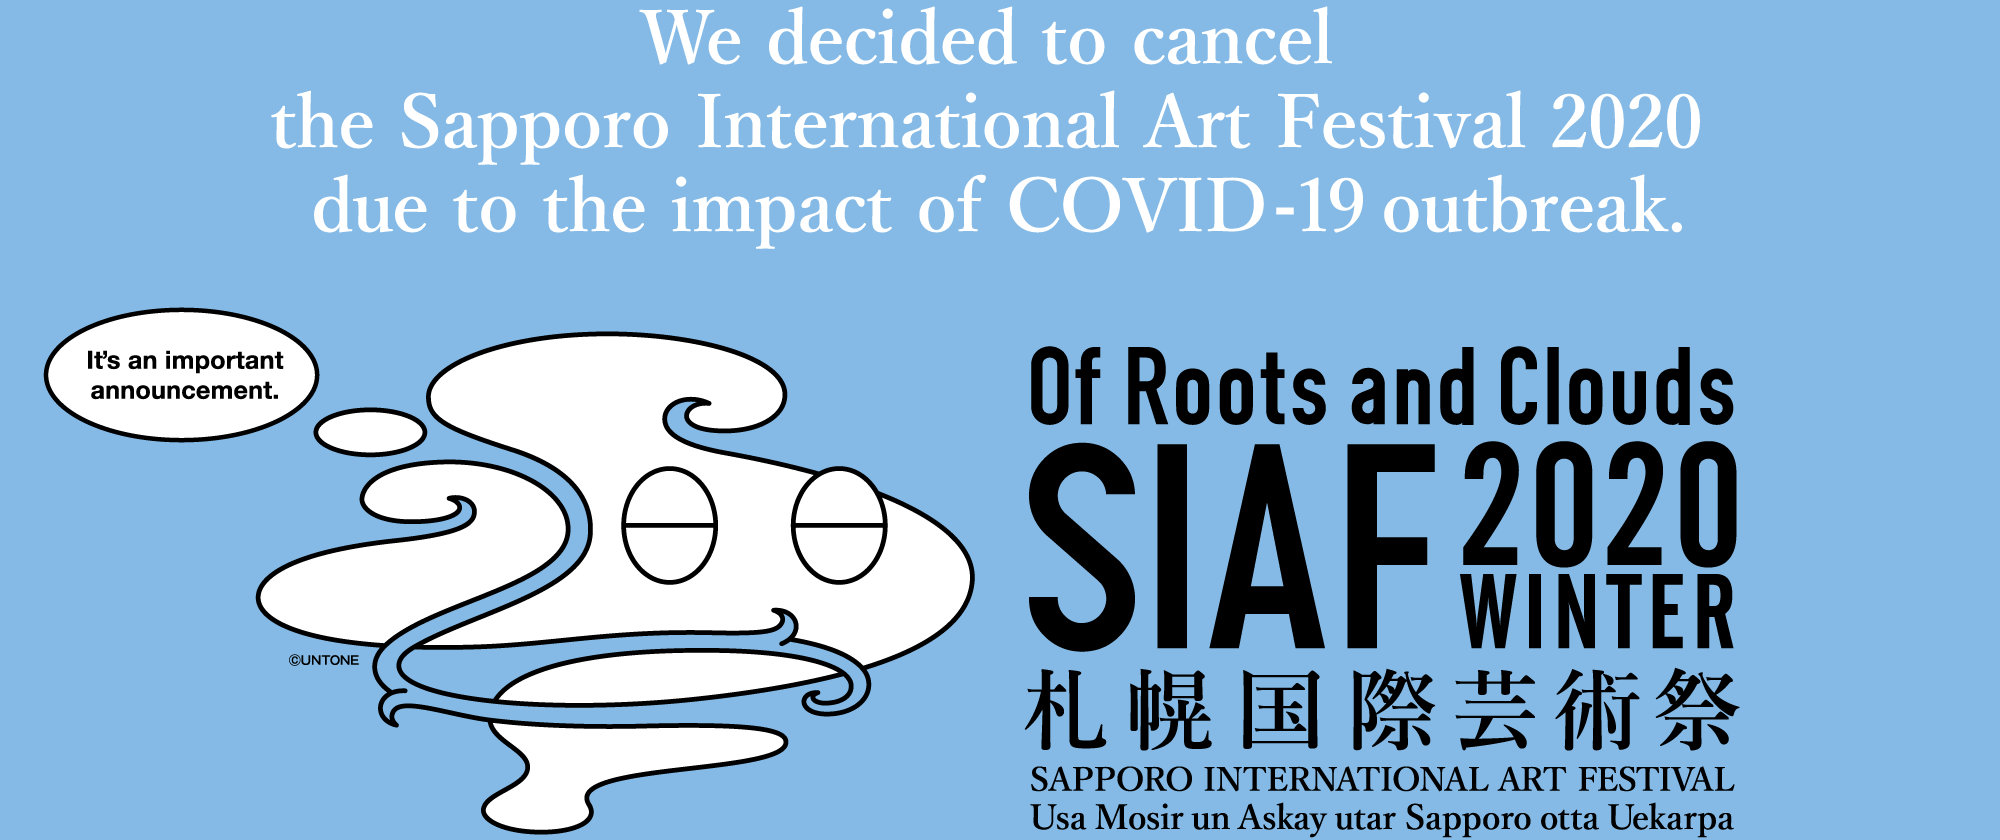 Sapporo International Art Festival 2020 cancelled